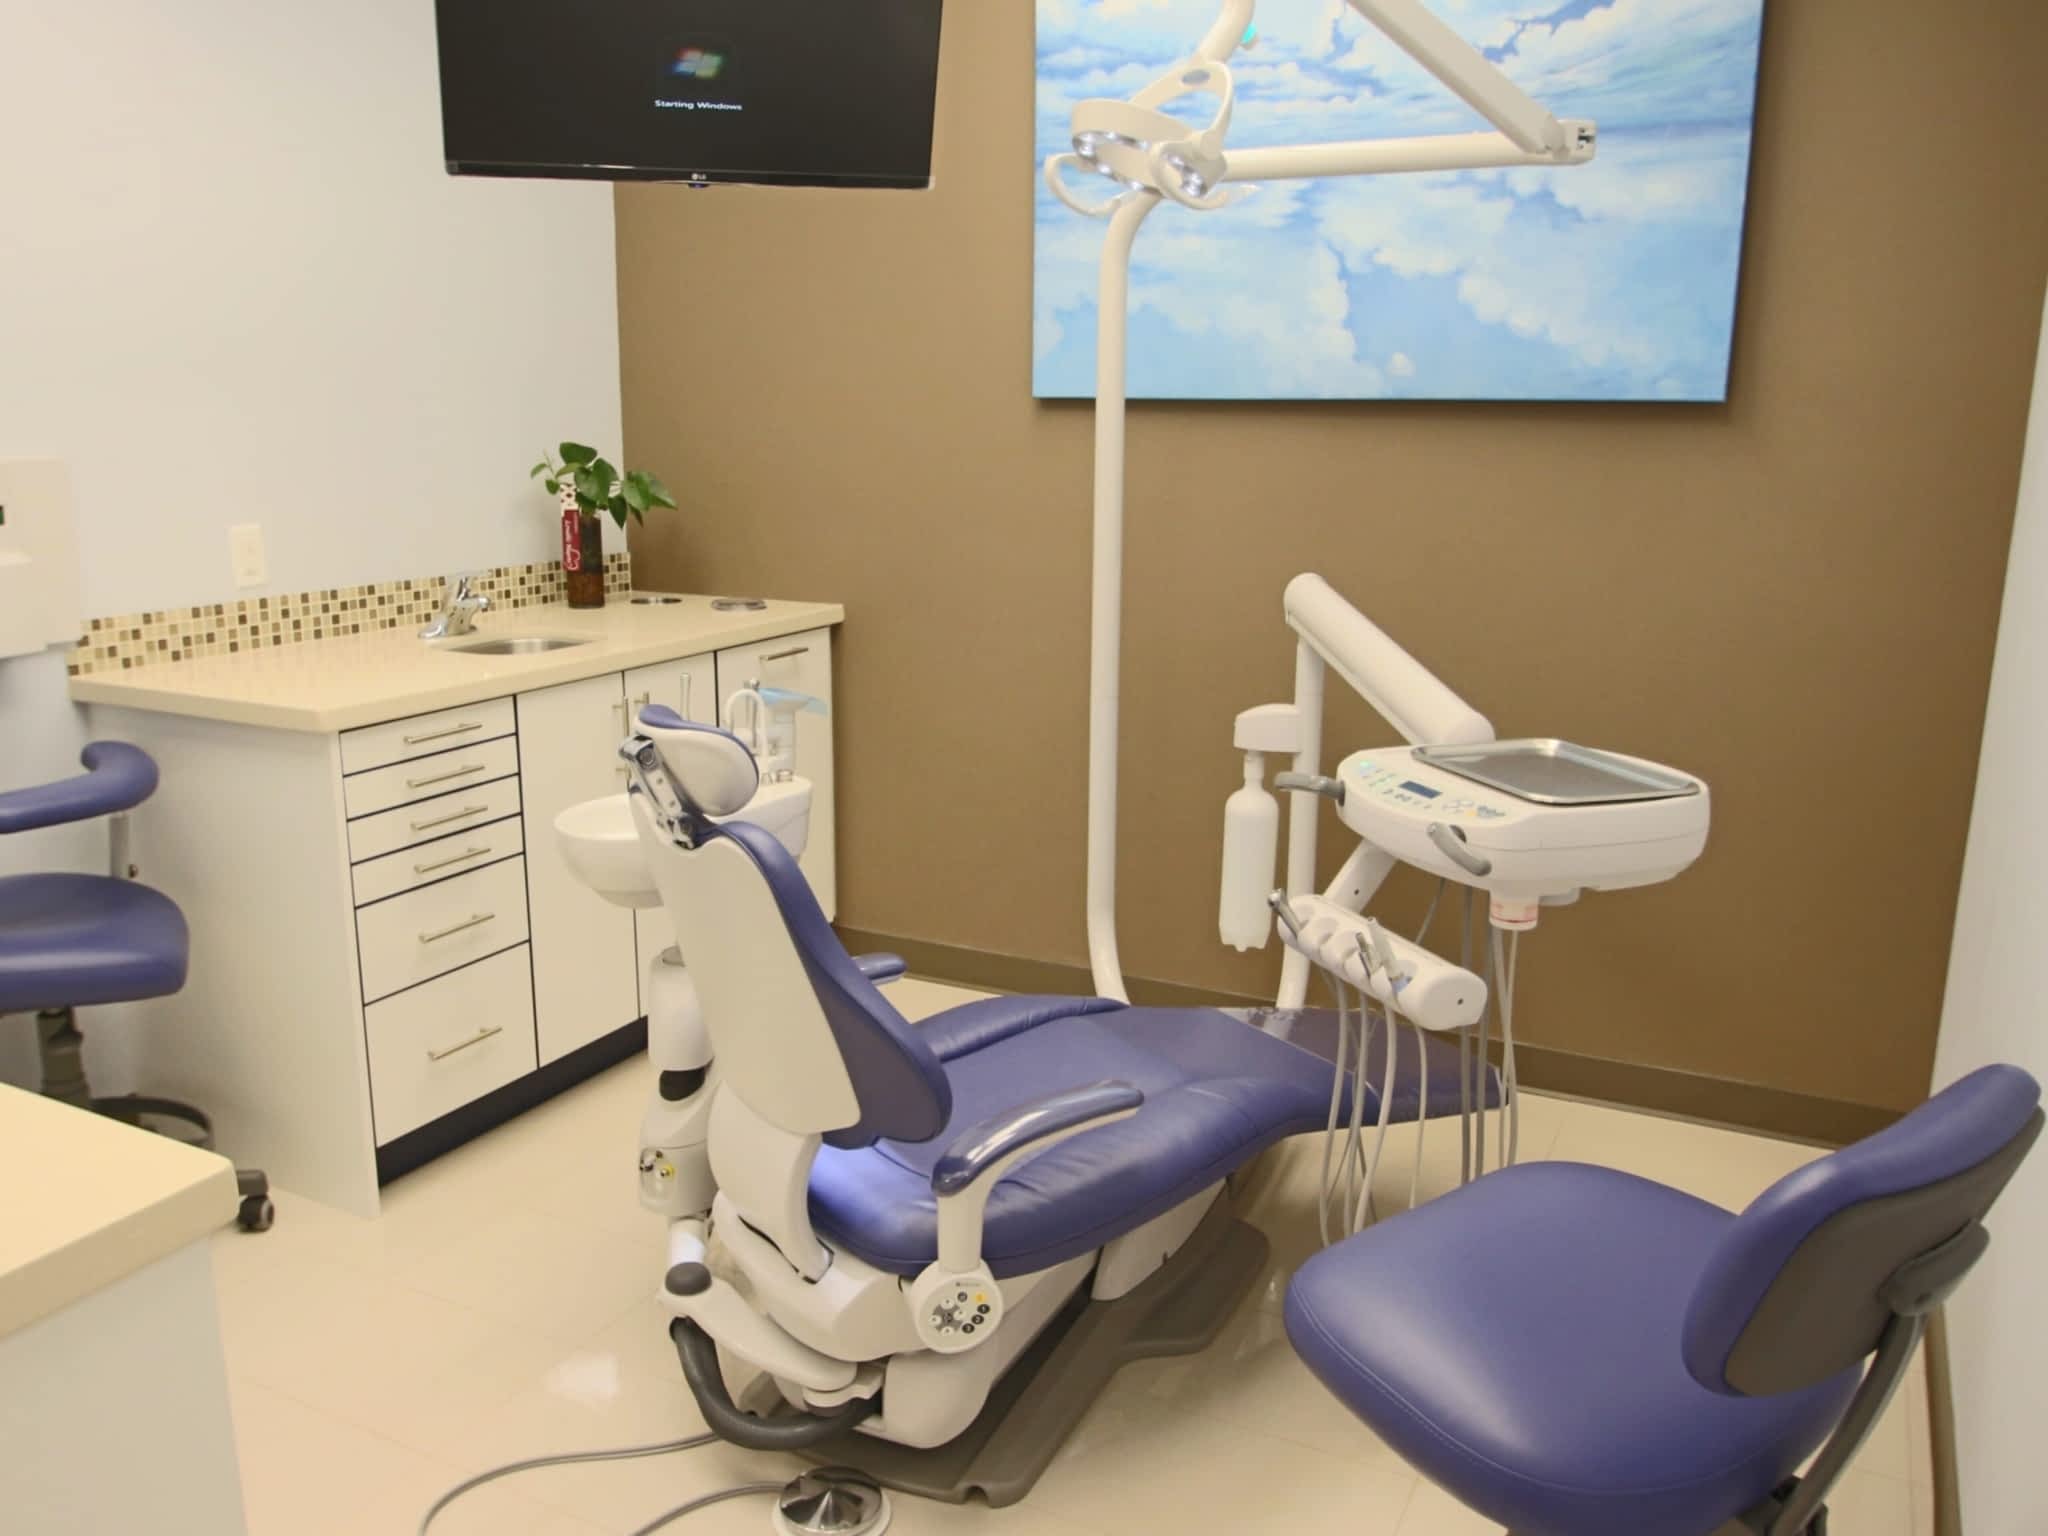 photo Karas Dental Clinic